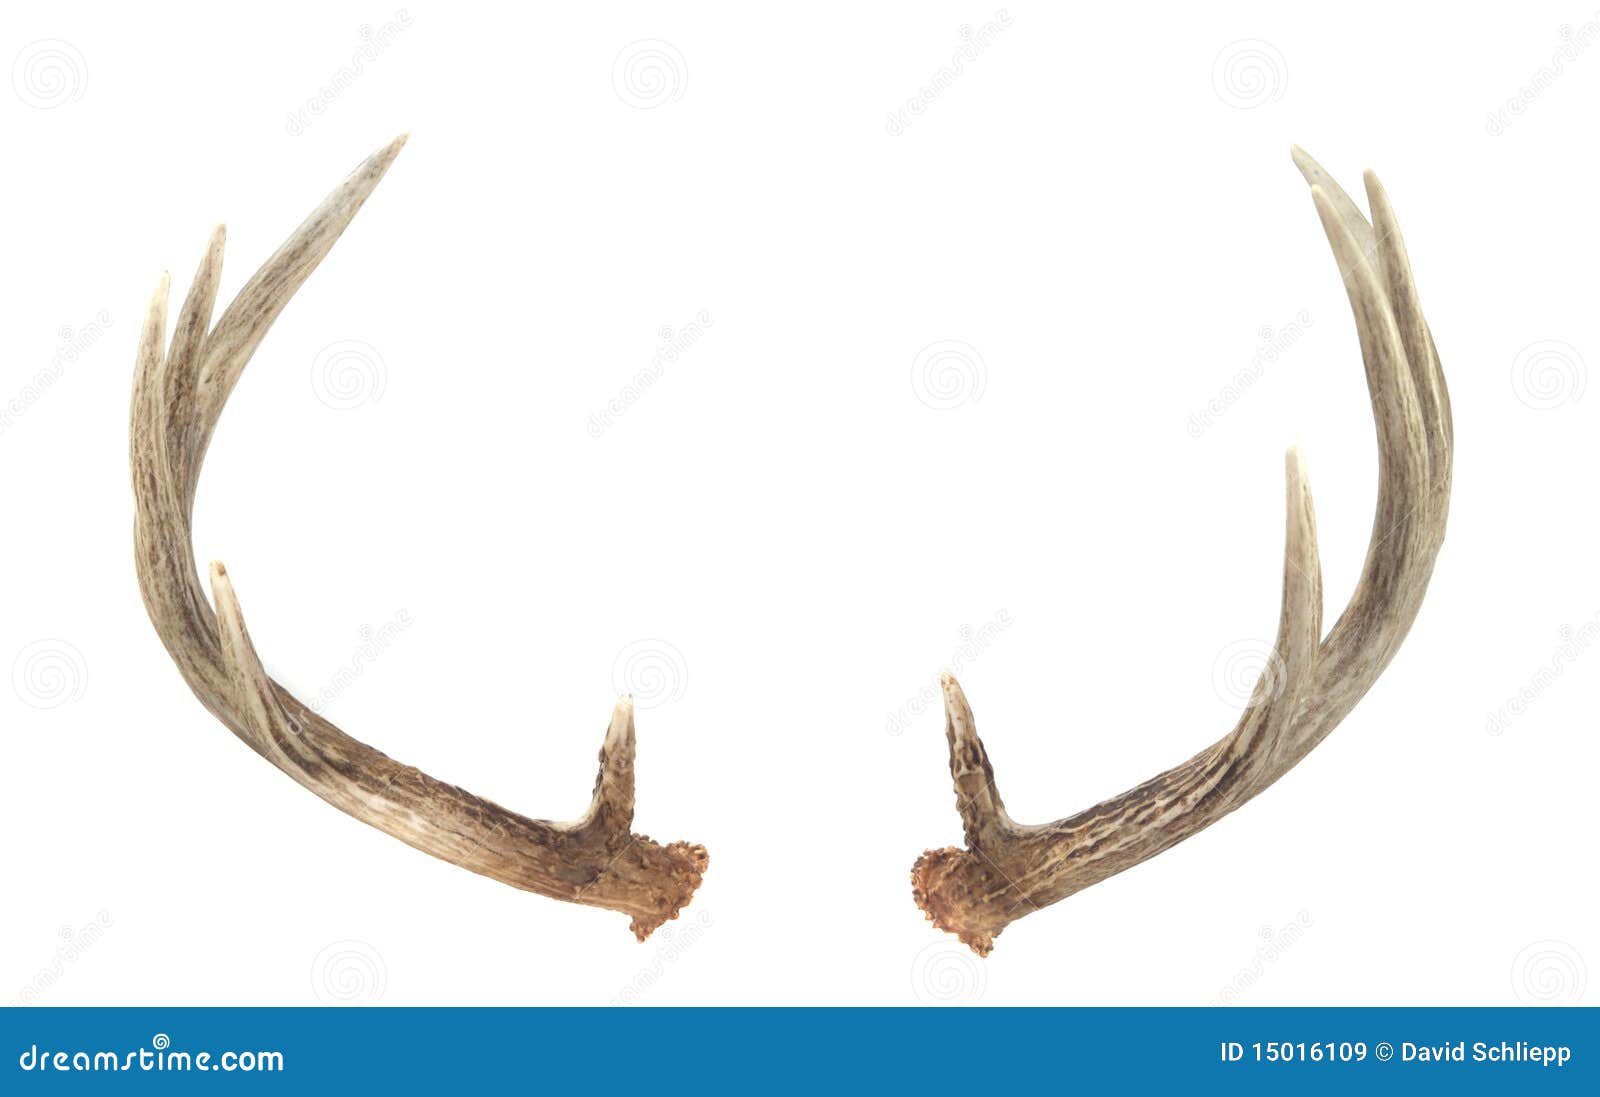 rear view of whitetail deer antlers